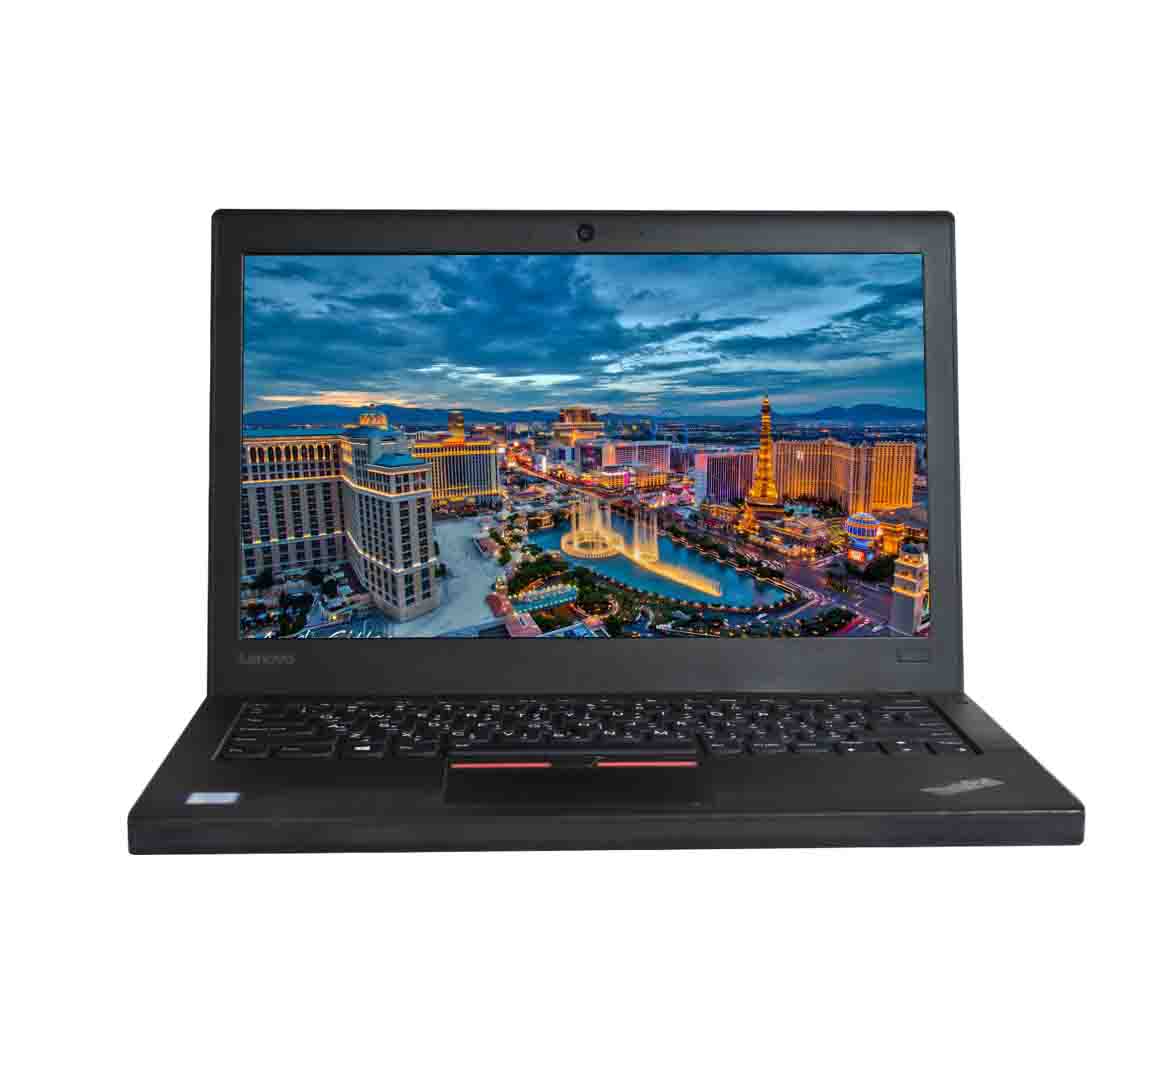 Lenovo ThinkPad X260 Business Laptop, Intel Core i5-6th Generation